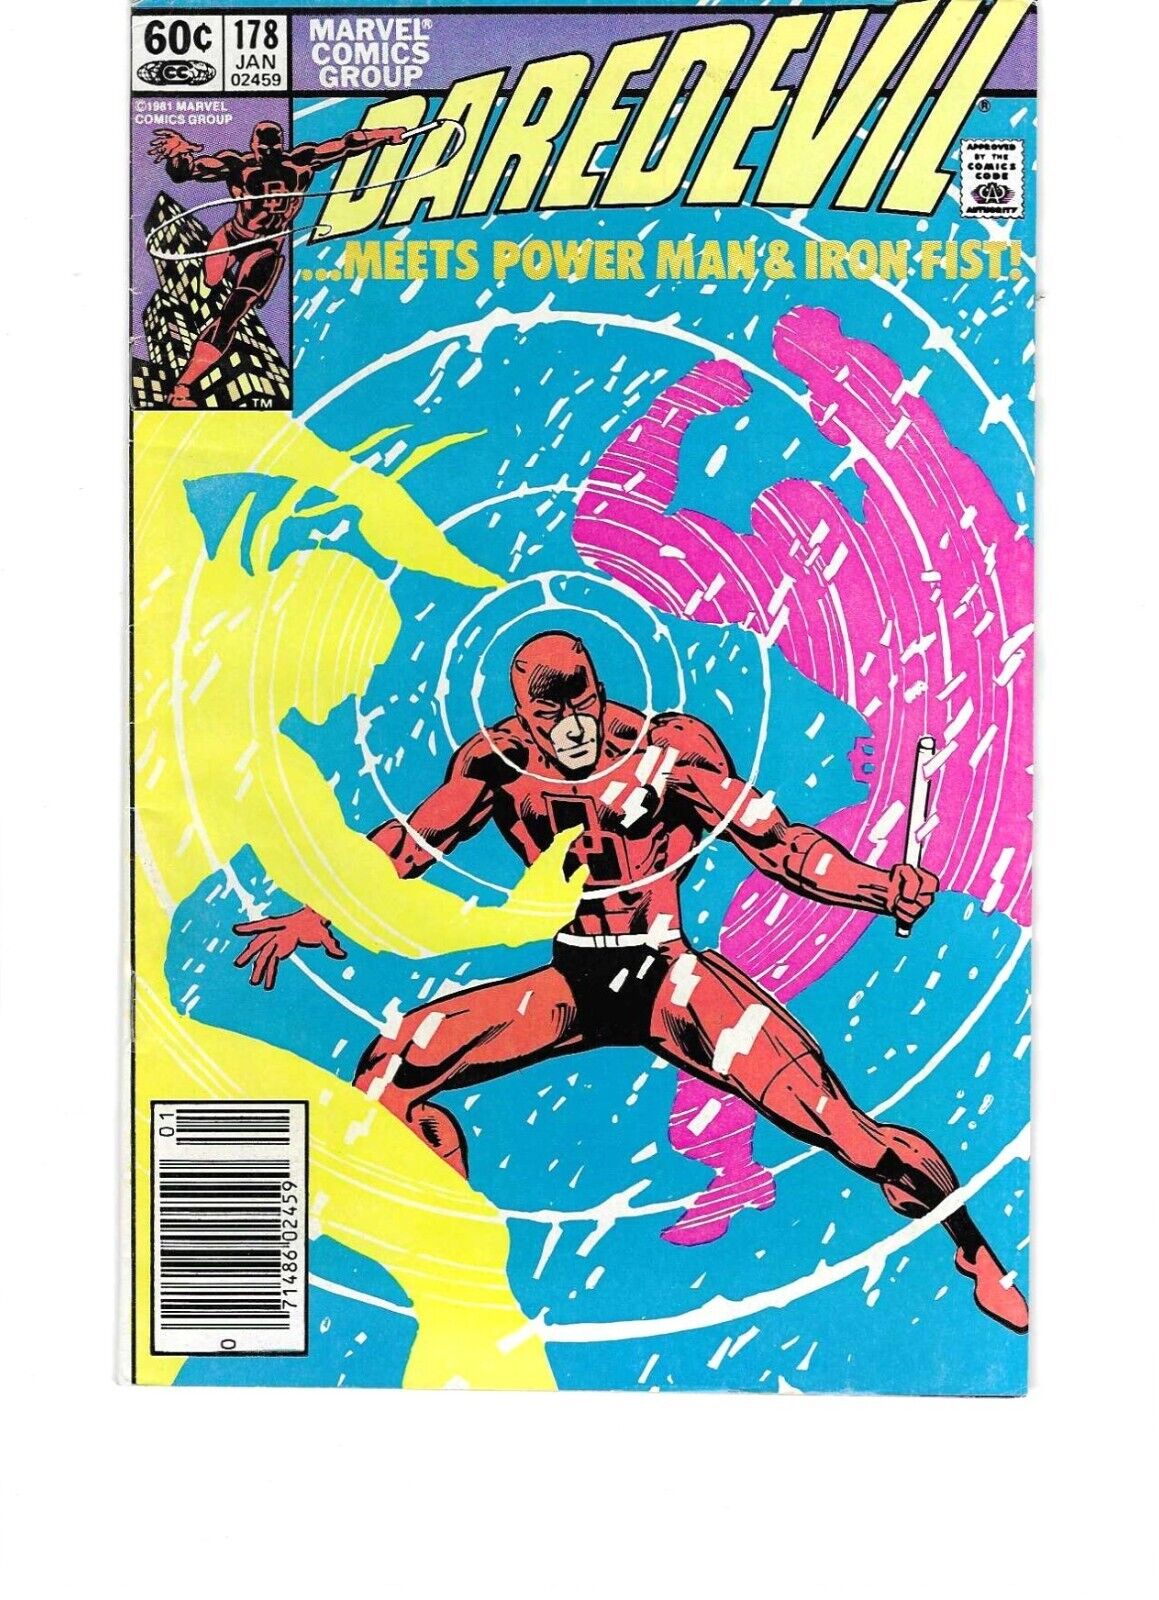 DAREDEVIL 178 Frank Miller 1982 1st meeting of Daredevil, Power Man & Iron Fist